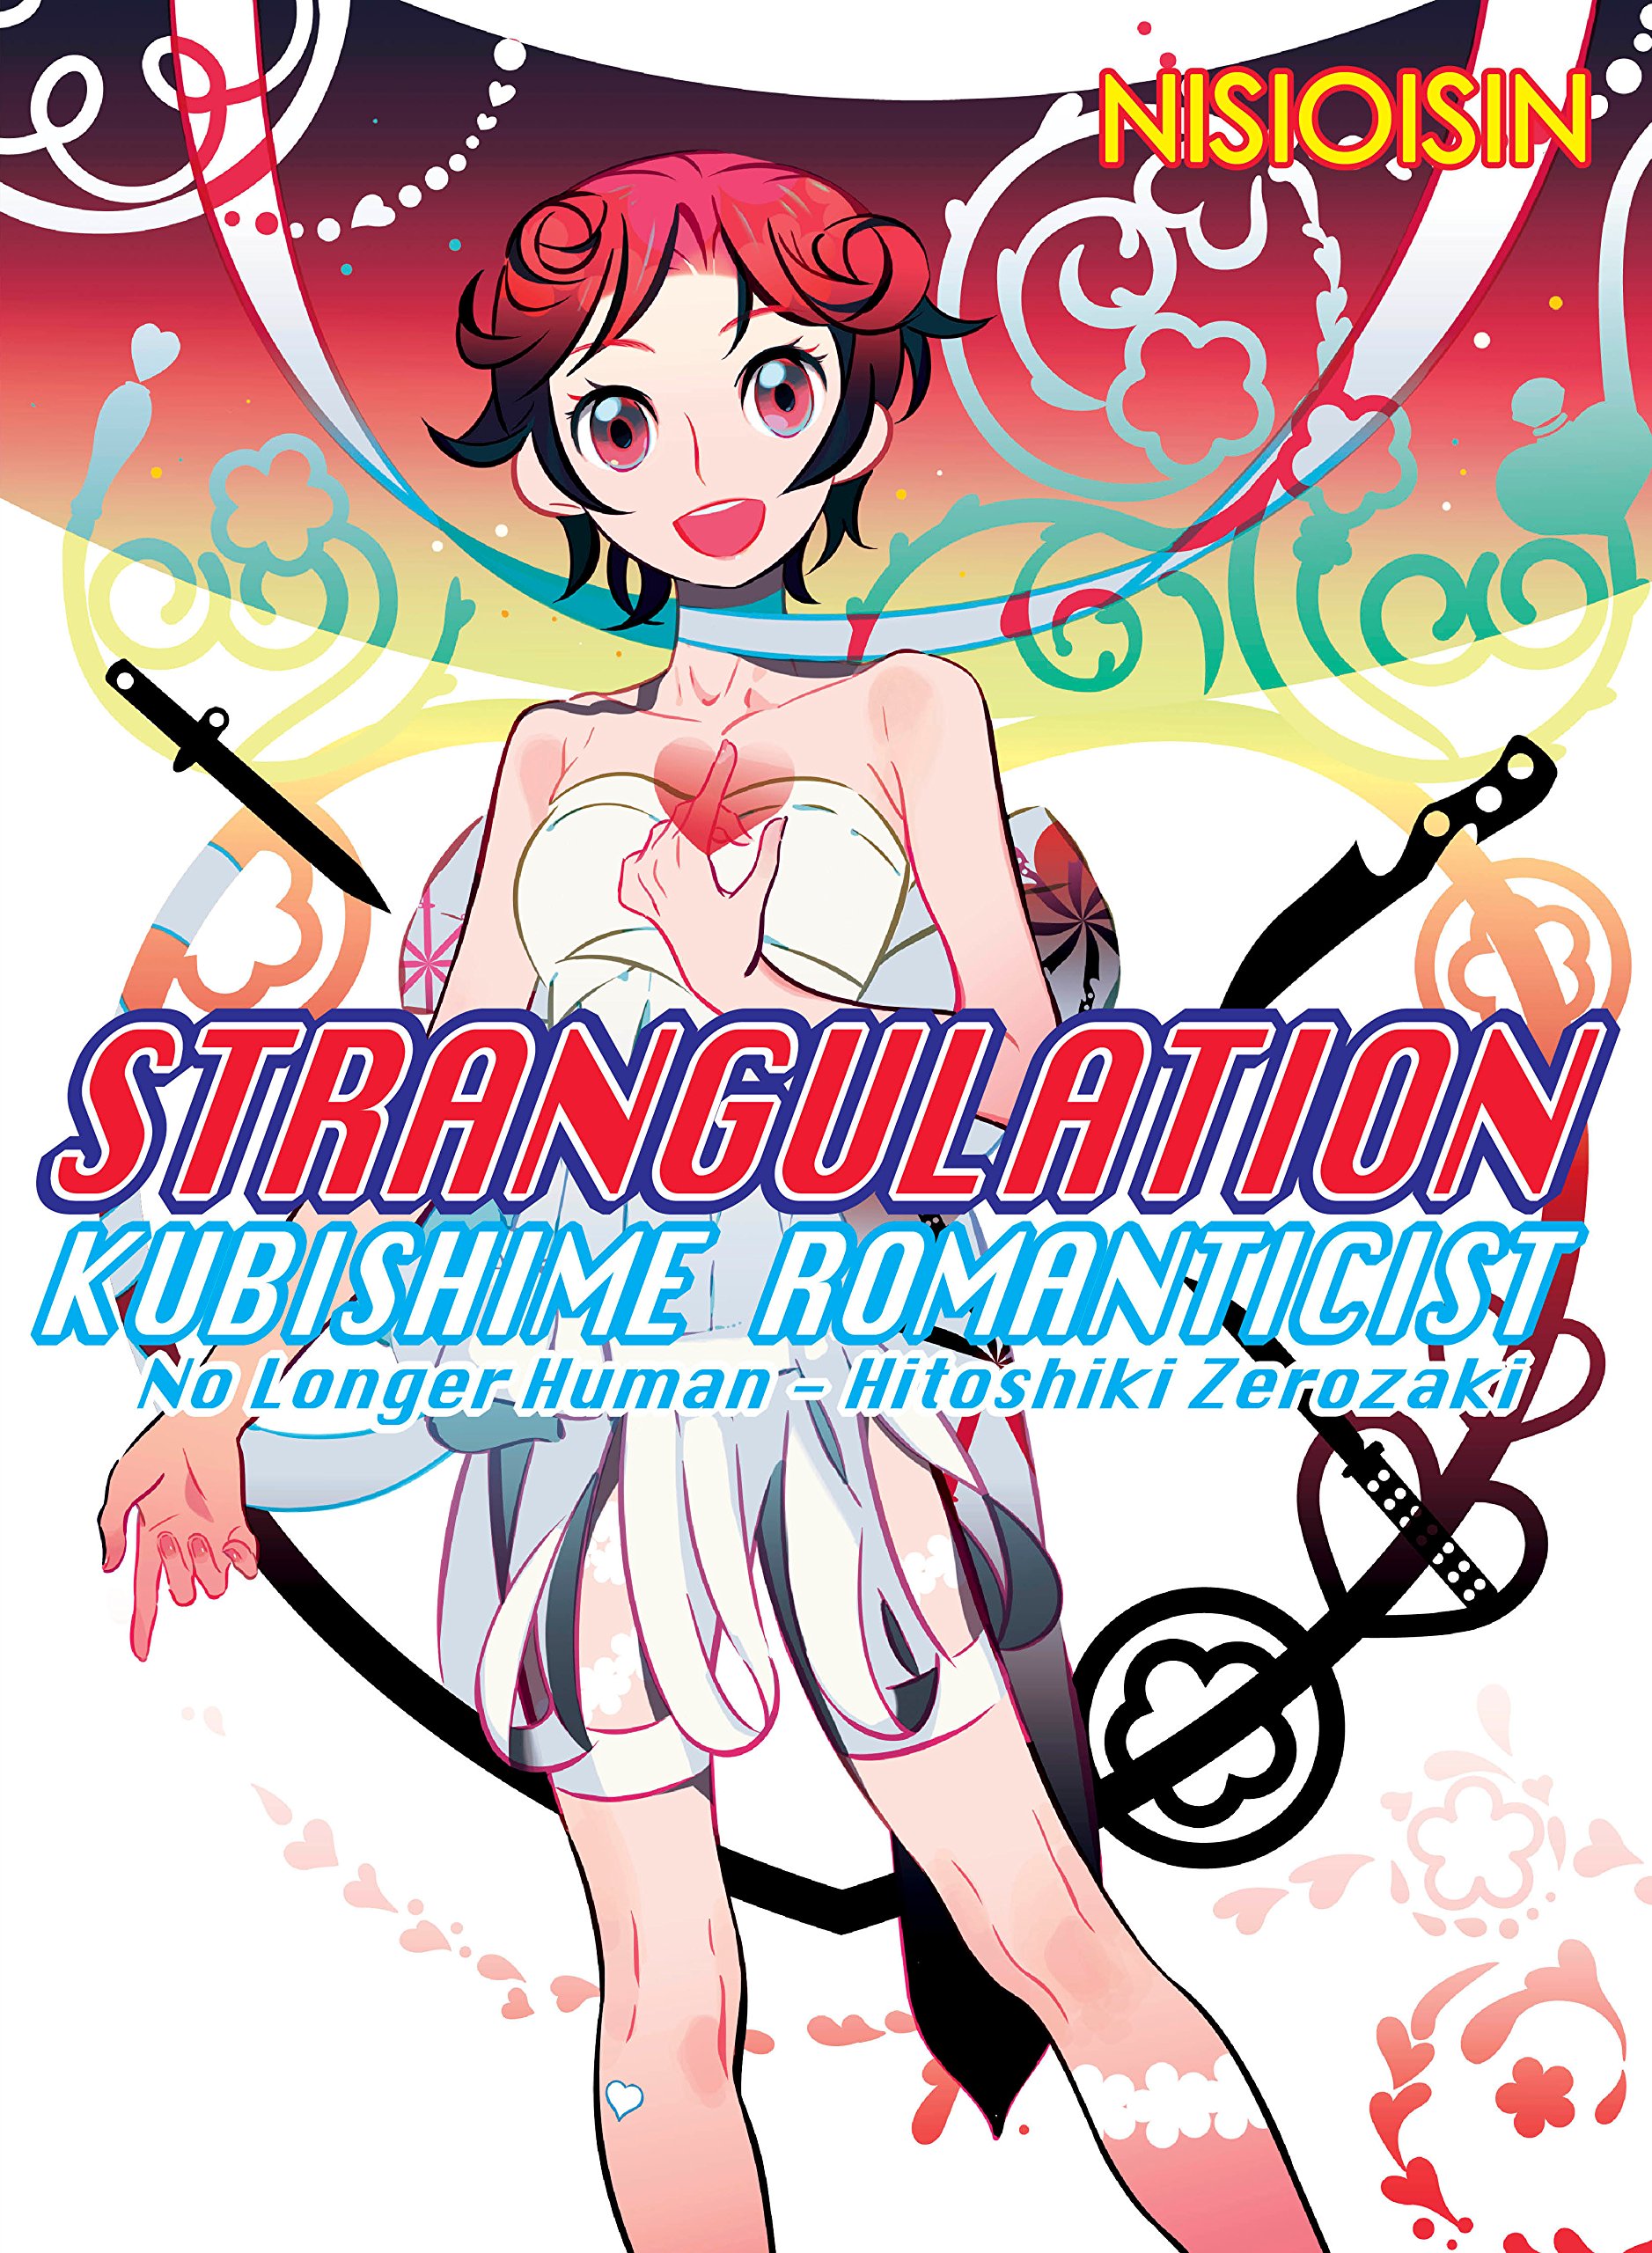 Strangulation: Kubishime Romanticist. No Longer Human - Hitoshiki Zerozaki.